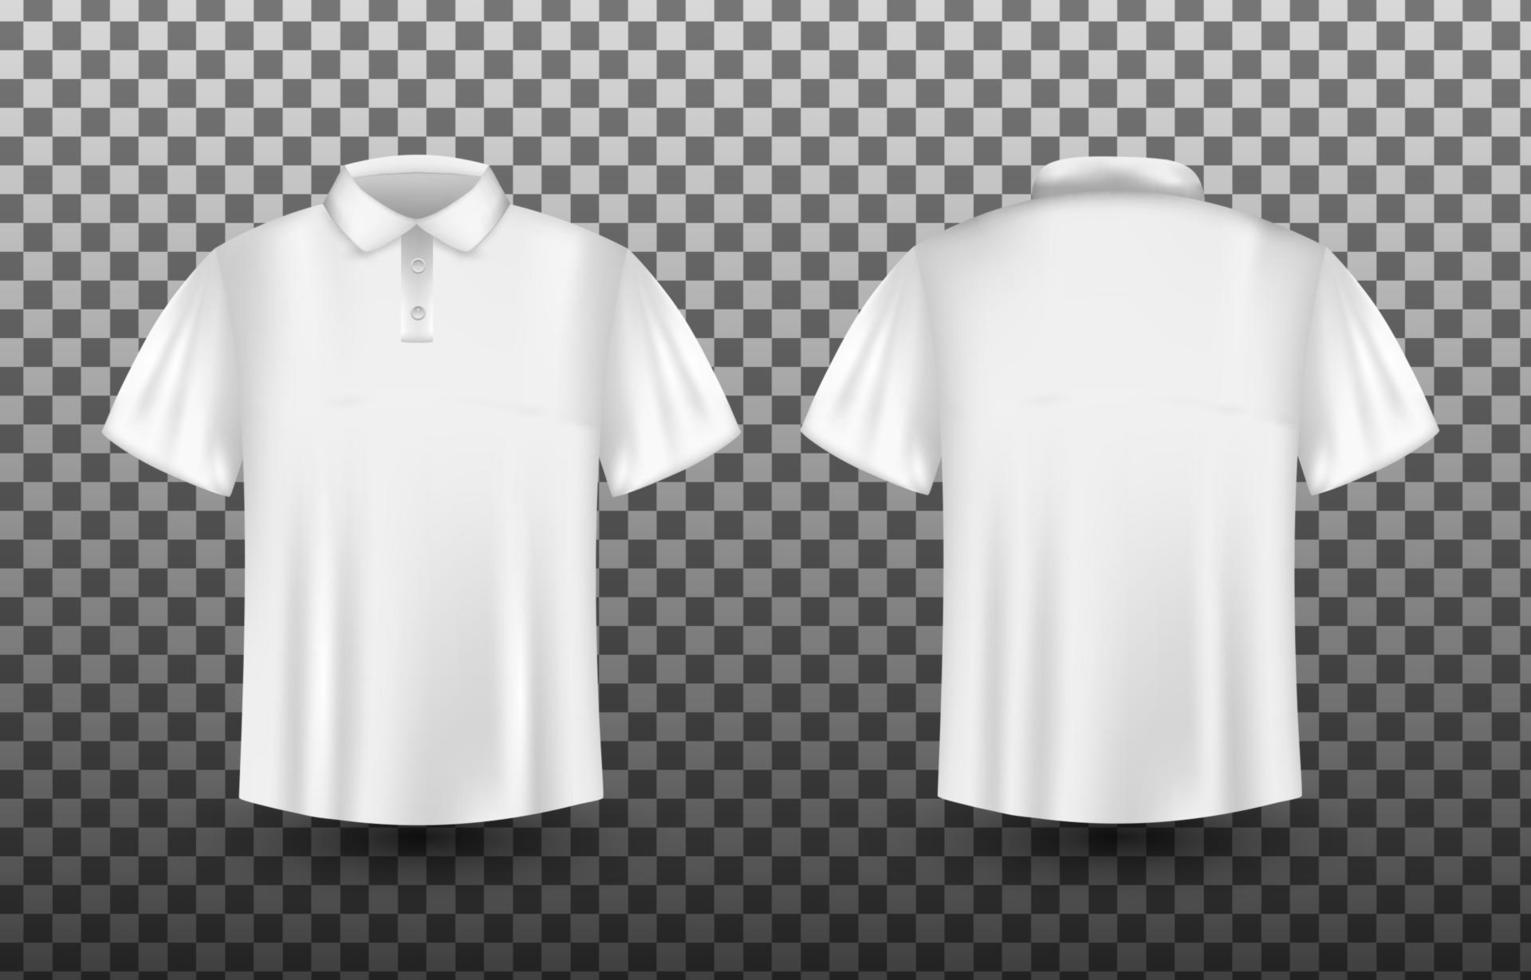 realistisch wit polo overhemd mockup vector